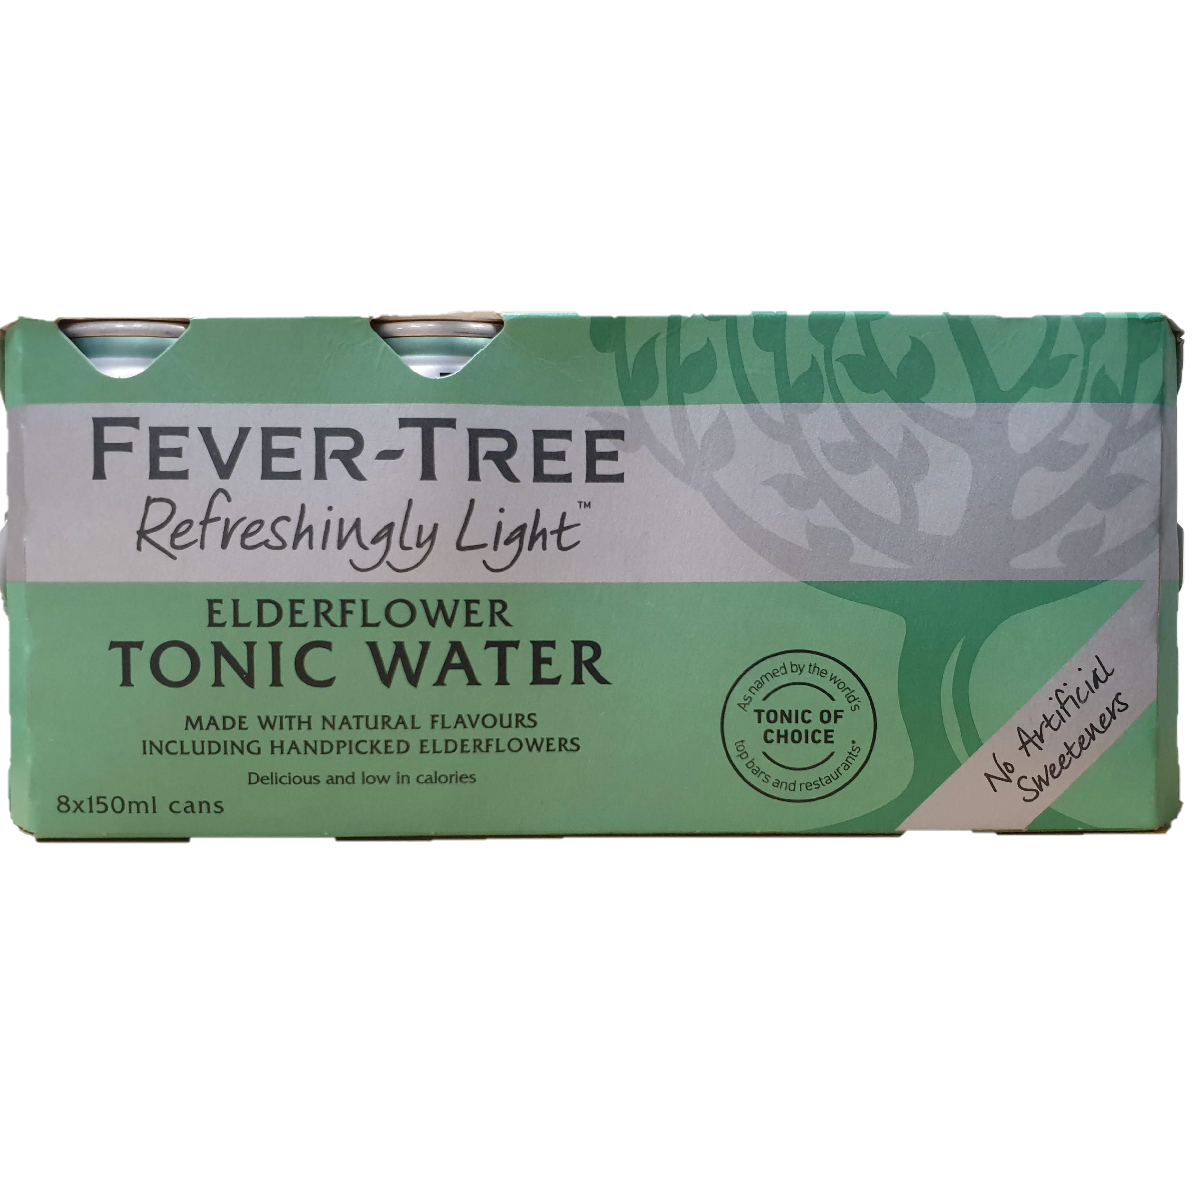 Fever-Tree Elderflower Tonic Water 8x150ml